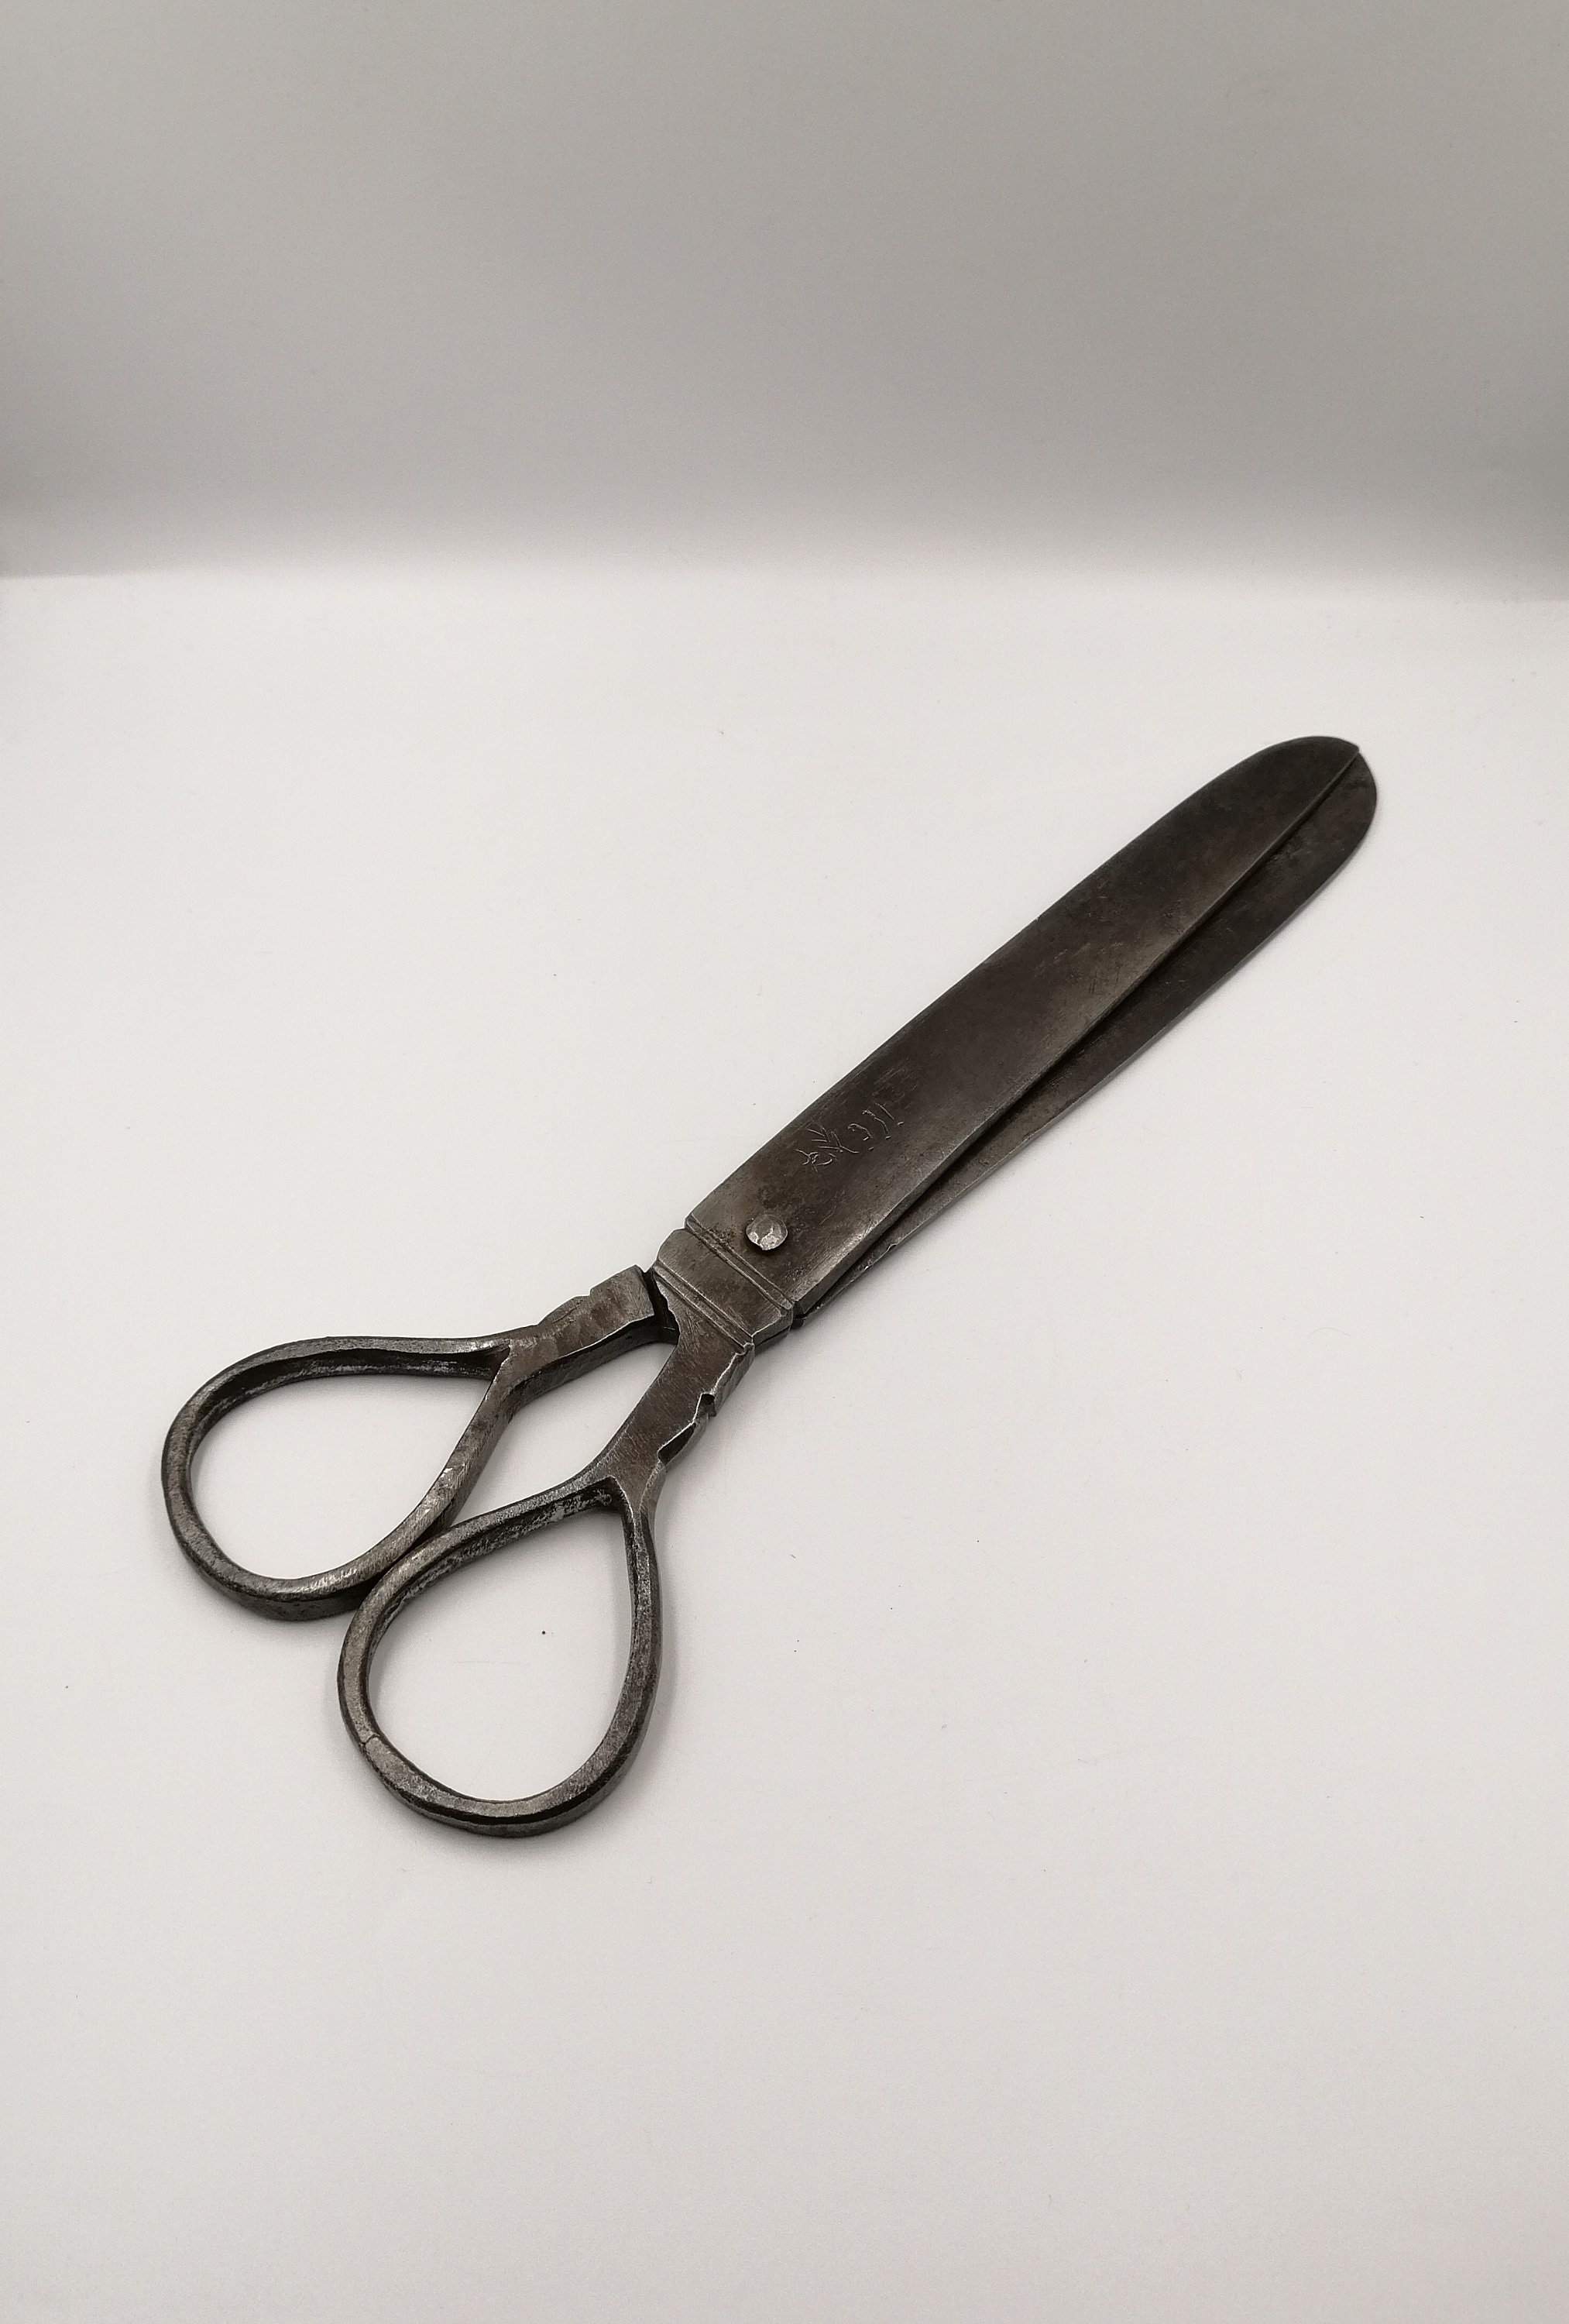 Vintage Hair Salon, Barber Scissors, Shears, S.R. Droescher Arrow Brand,  20th Century, Germany Steel, Patina 